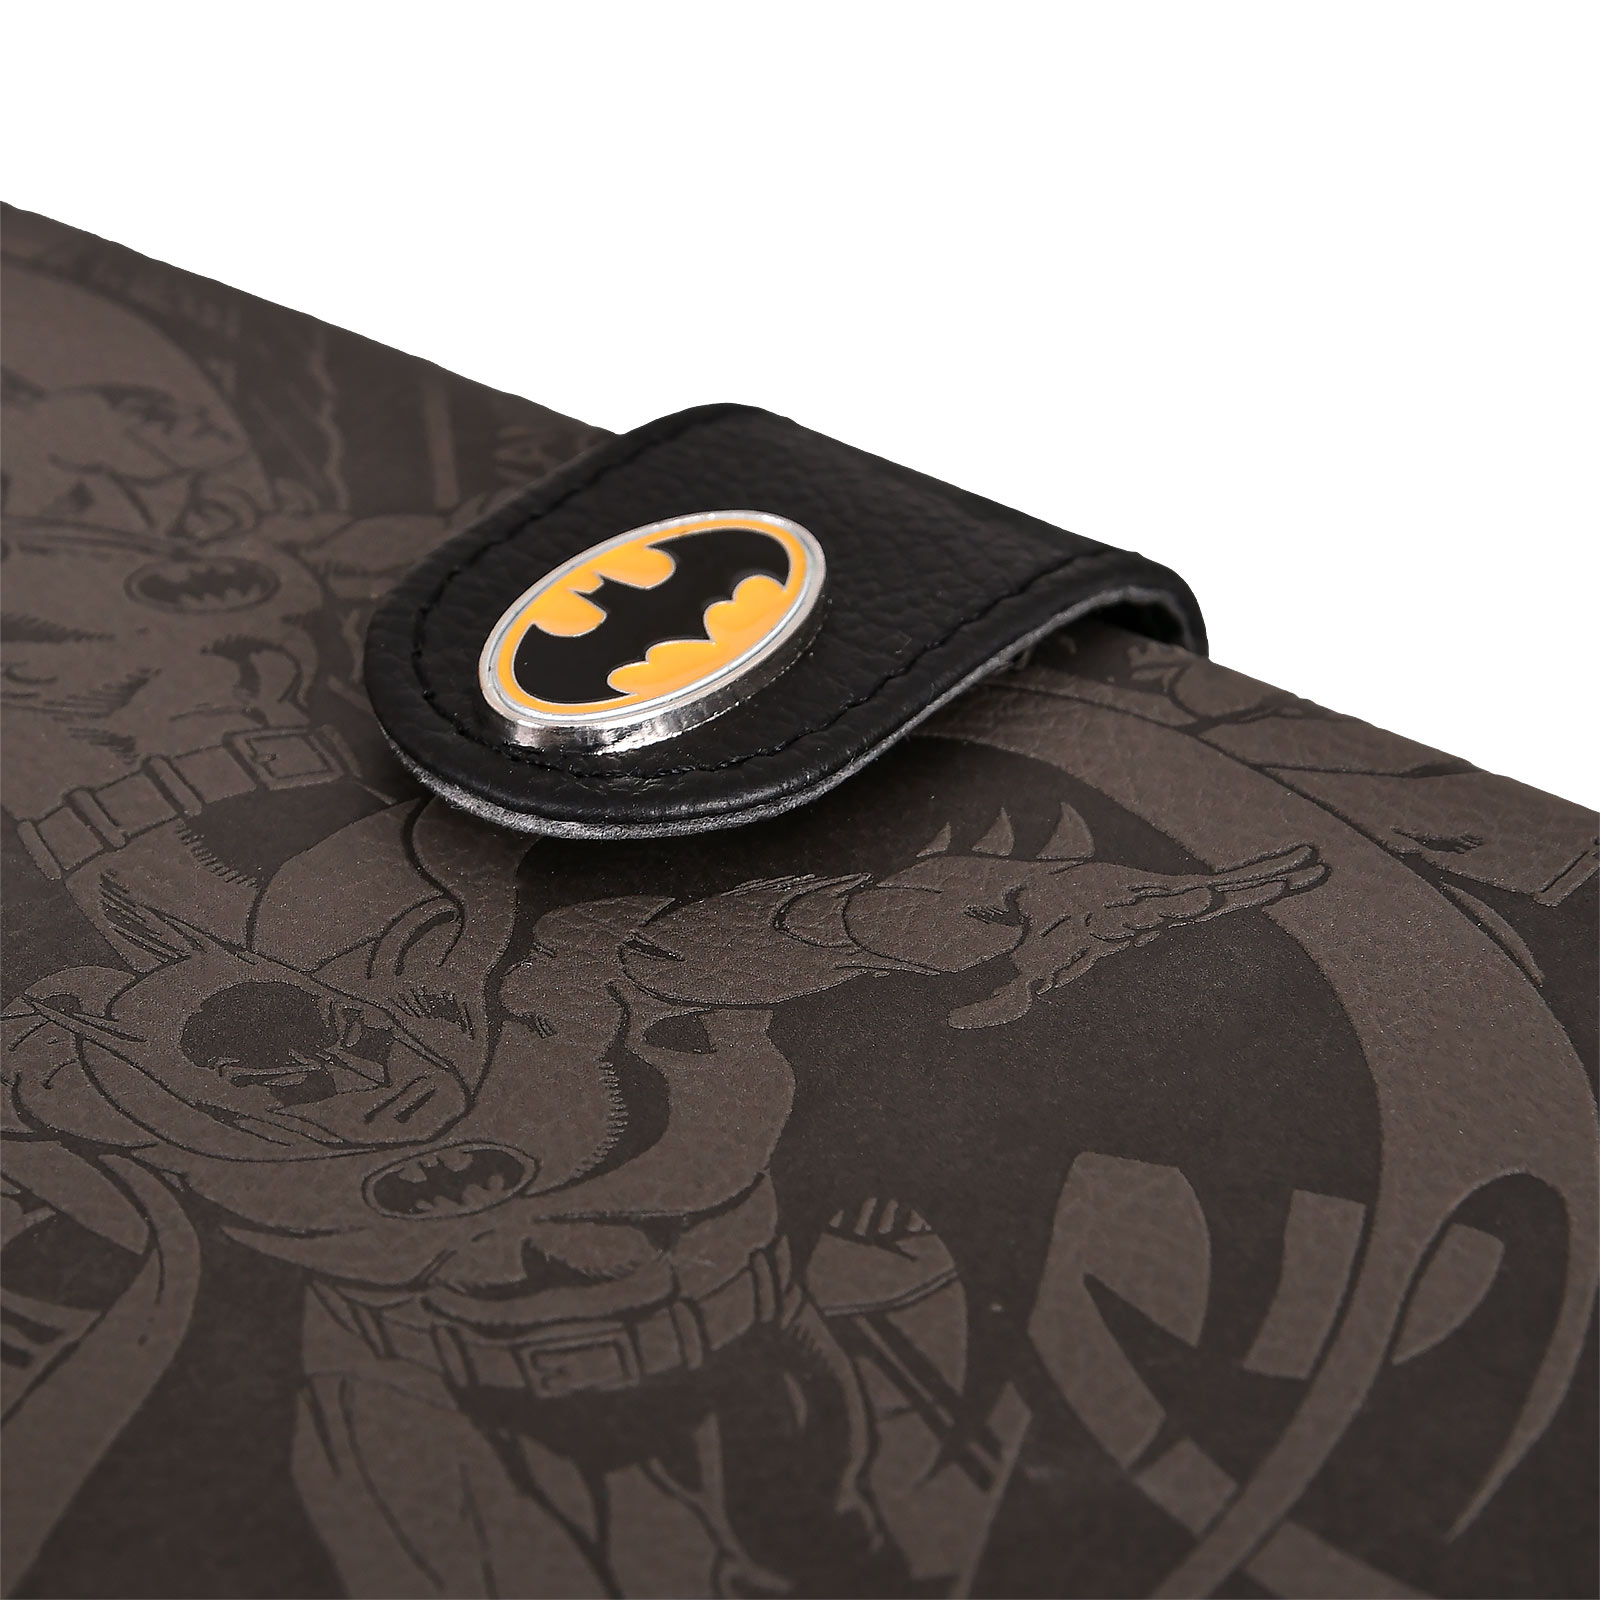 Batman - Comic Hero Premium Notebook A5